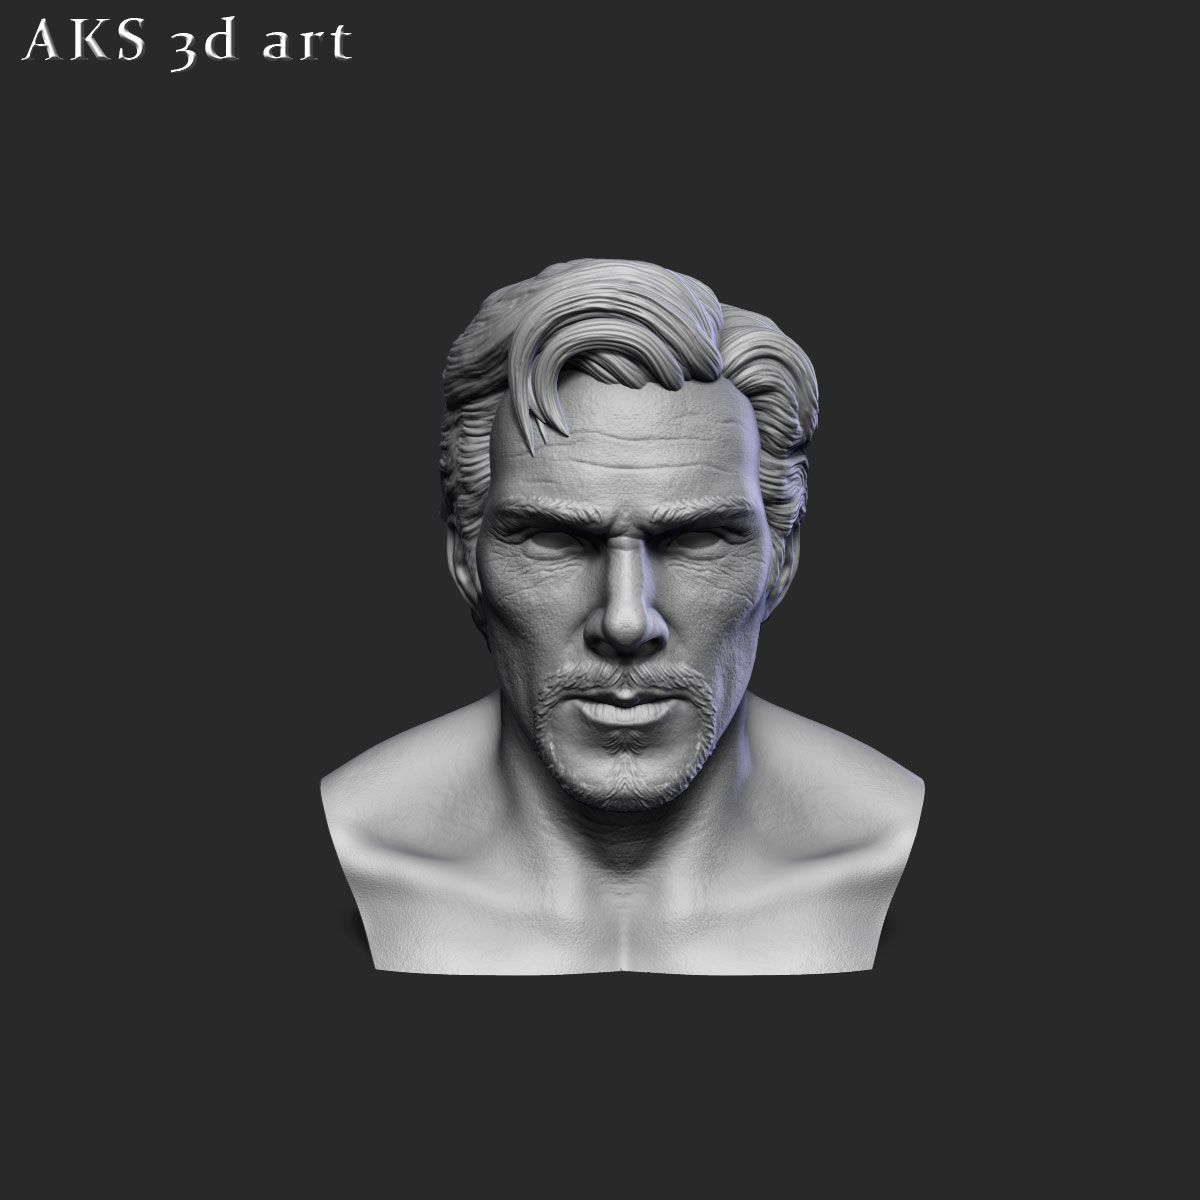 Gree tcmr ous Archivo 3D arte de la escultura facial de benedict cumberbatch・Modelo imprimible en 3D para descargar, AS_3d_art